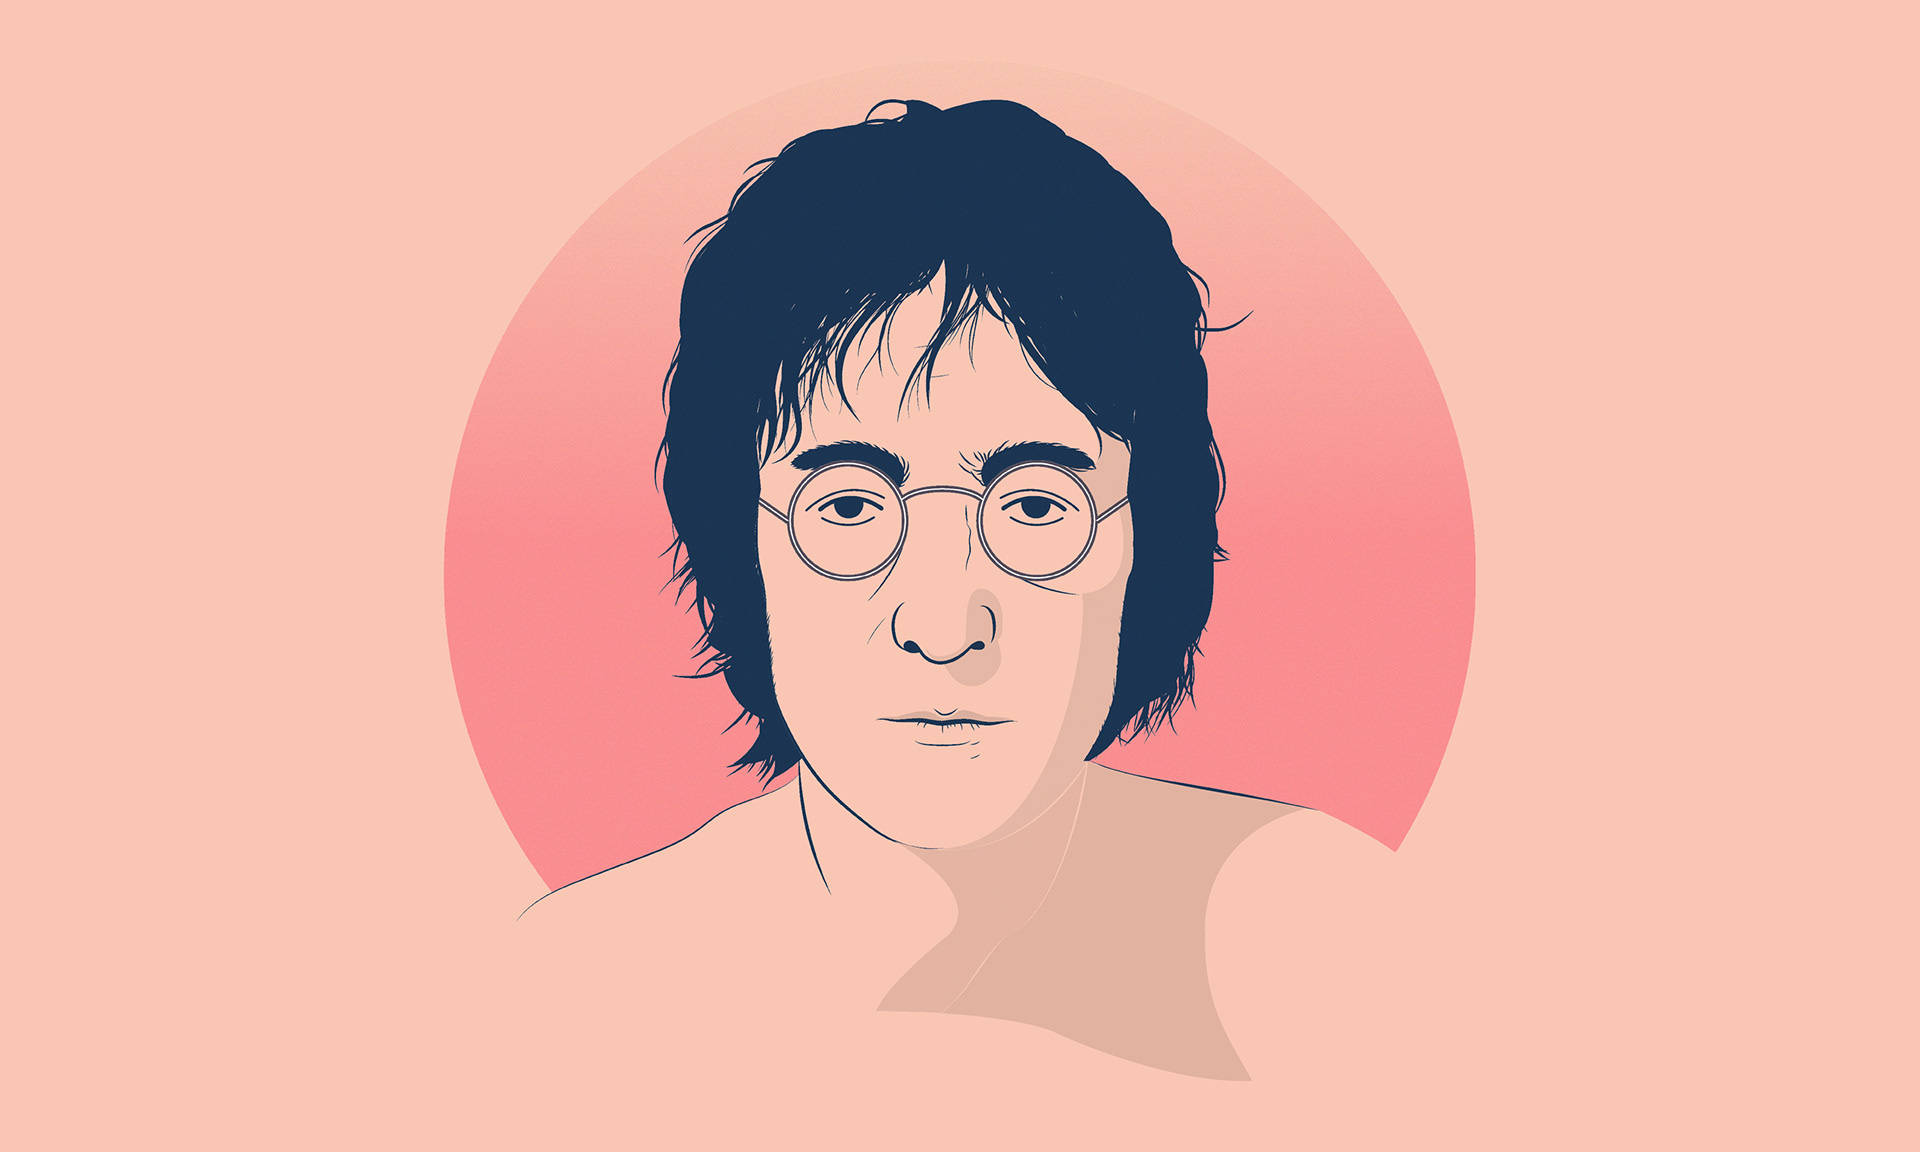 John Lennon Digital Illustration Wallpaper